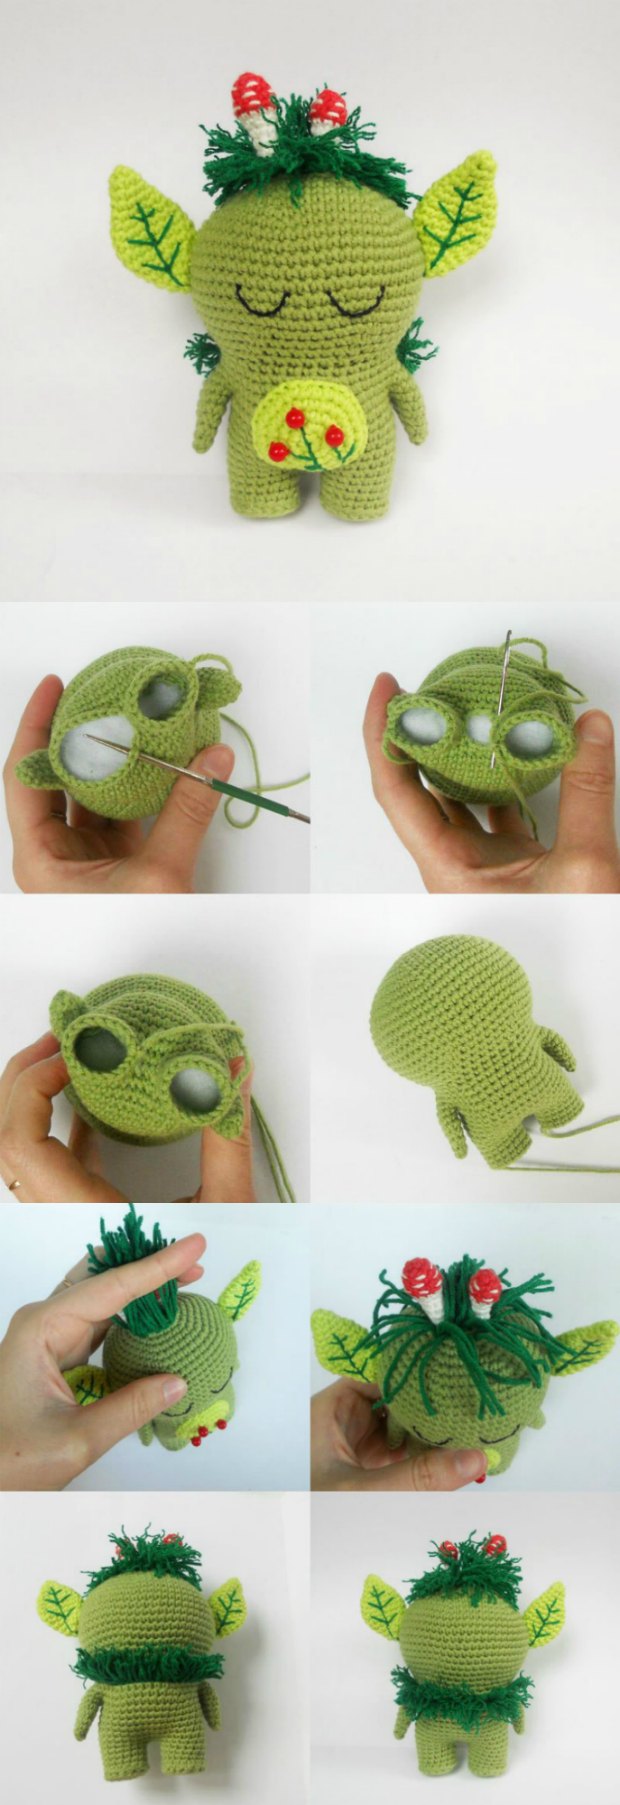 Free amigurumi crochet pattern. Forest Spirit. So cute!